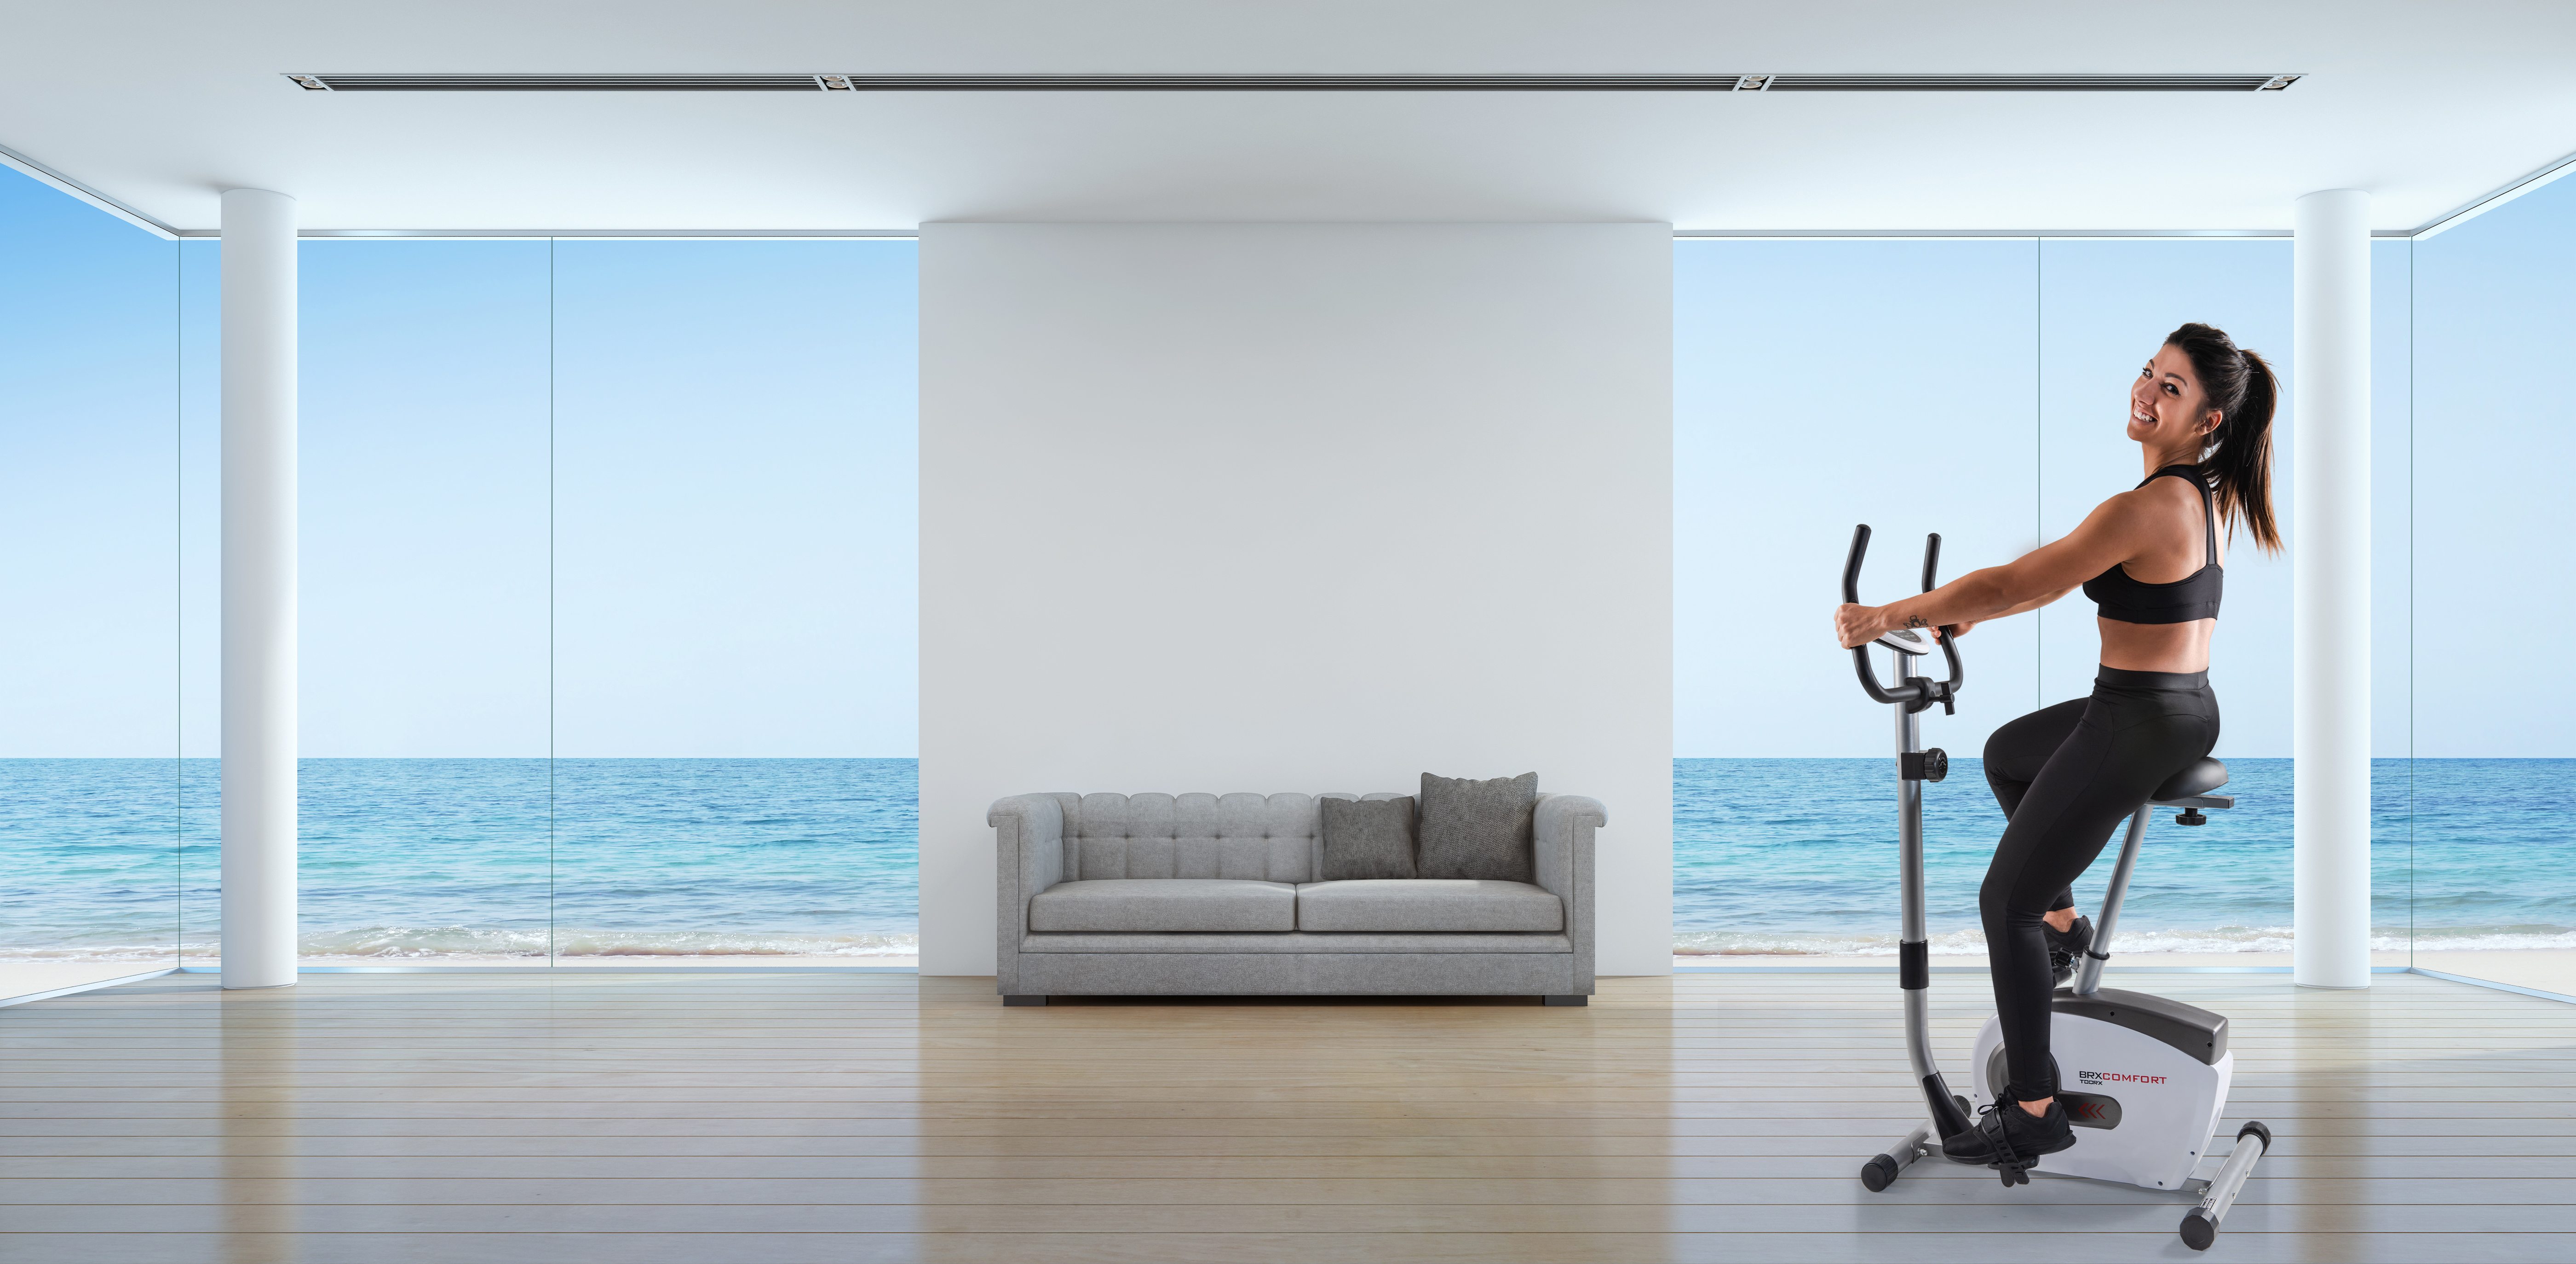 Sea view living room interior in modern beach house - 3D renderi